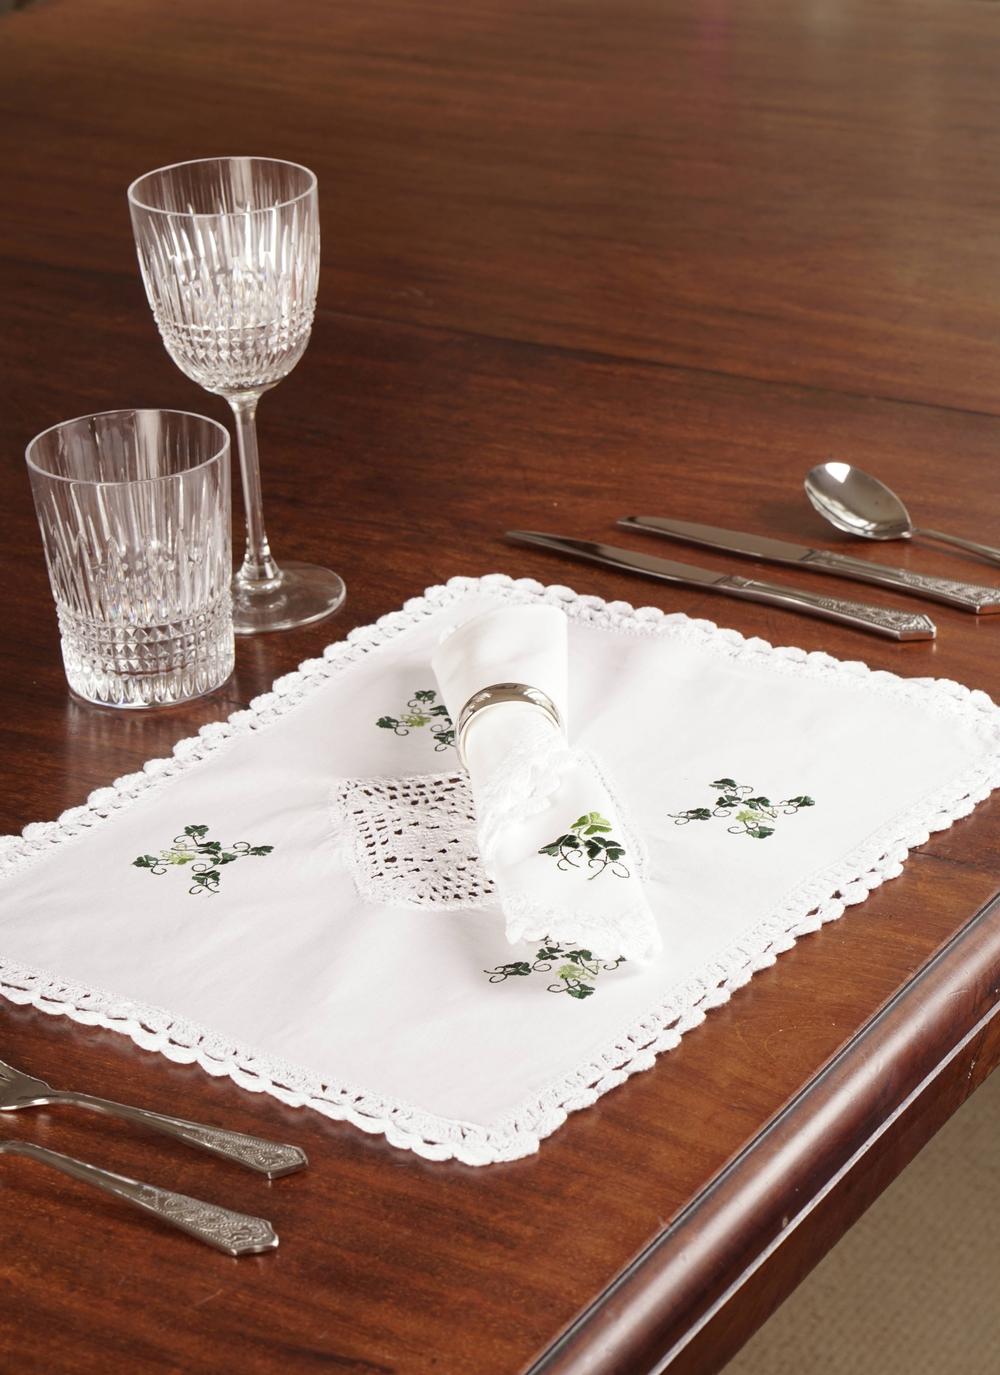 Blarney Shamrock Table Linens: Stunning shamrock table linens for your home